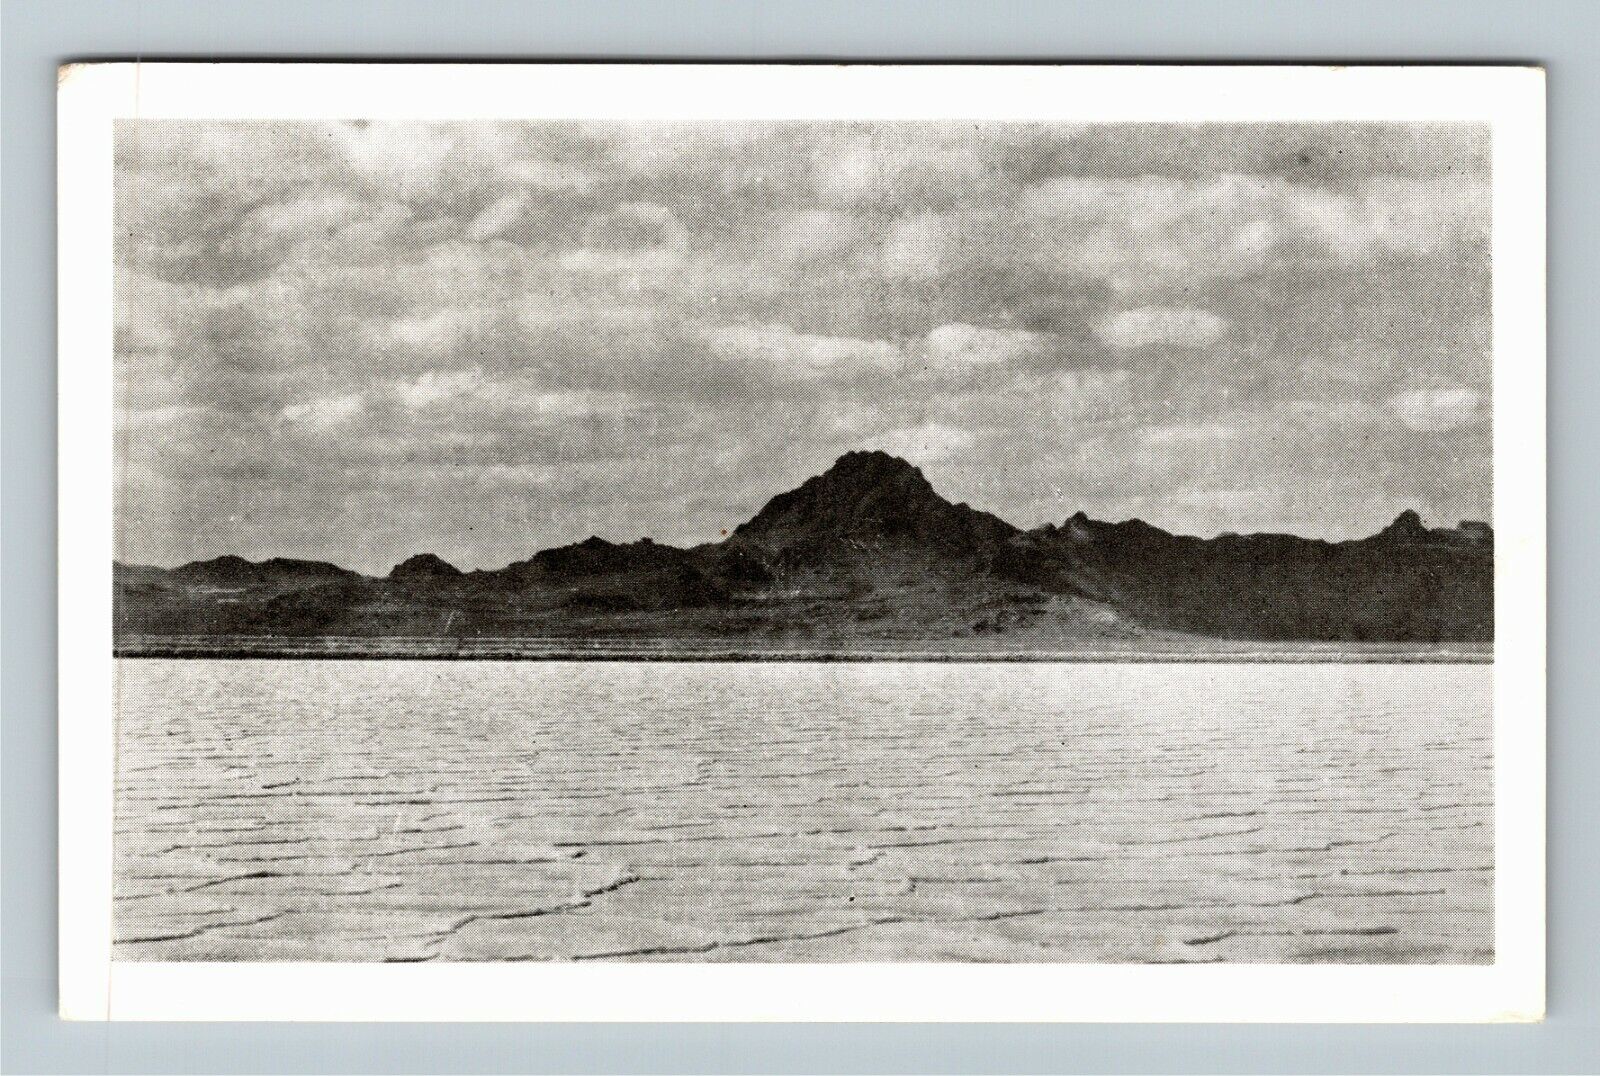 Salduro UT-Utah, Bonneville Salt Beds, Vintage Postcard